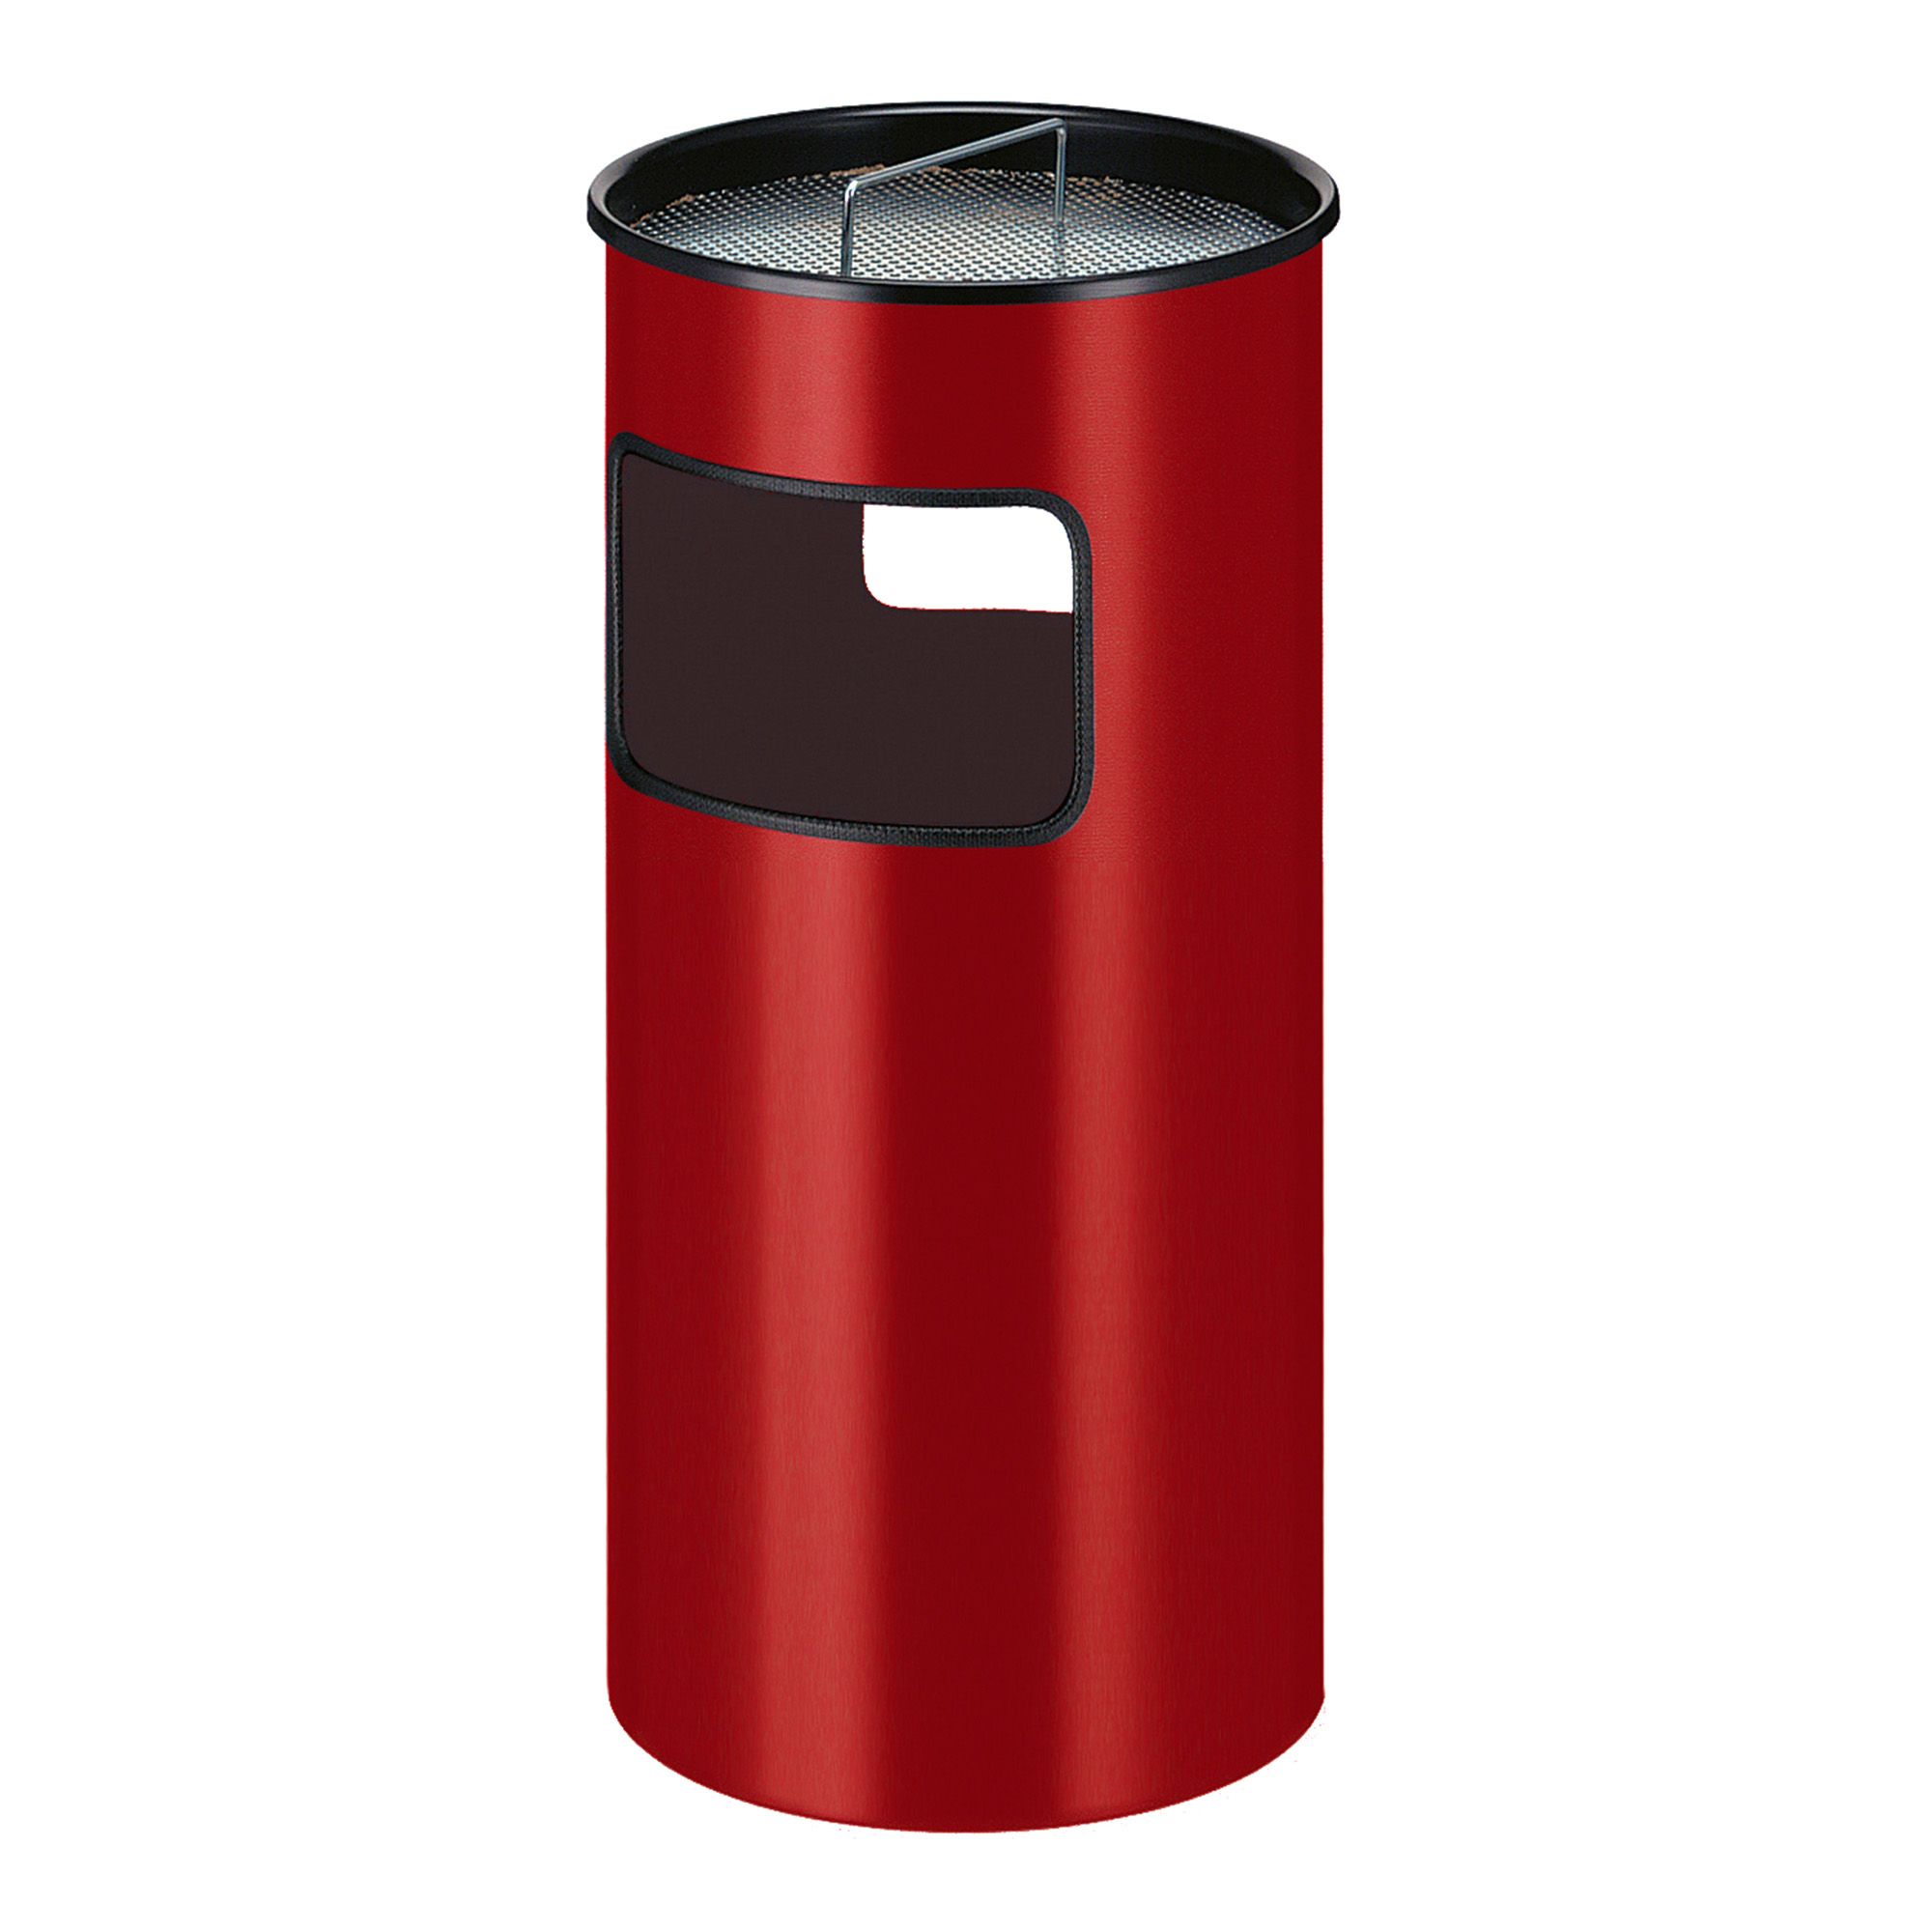 Abfall-Ascher-Kombination - Abfallbehälter mit Aschenbecher